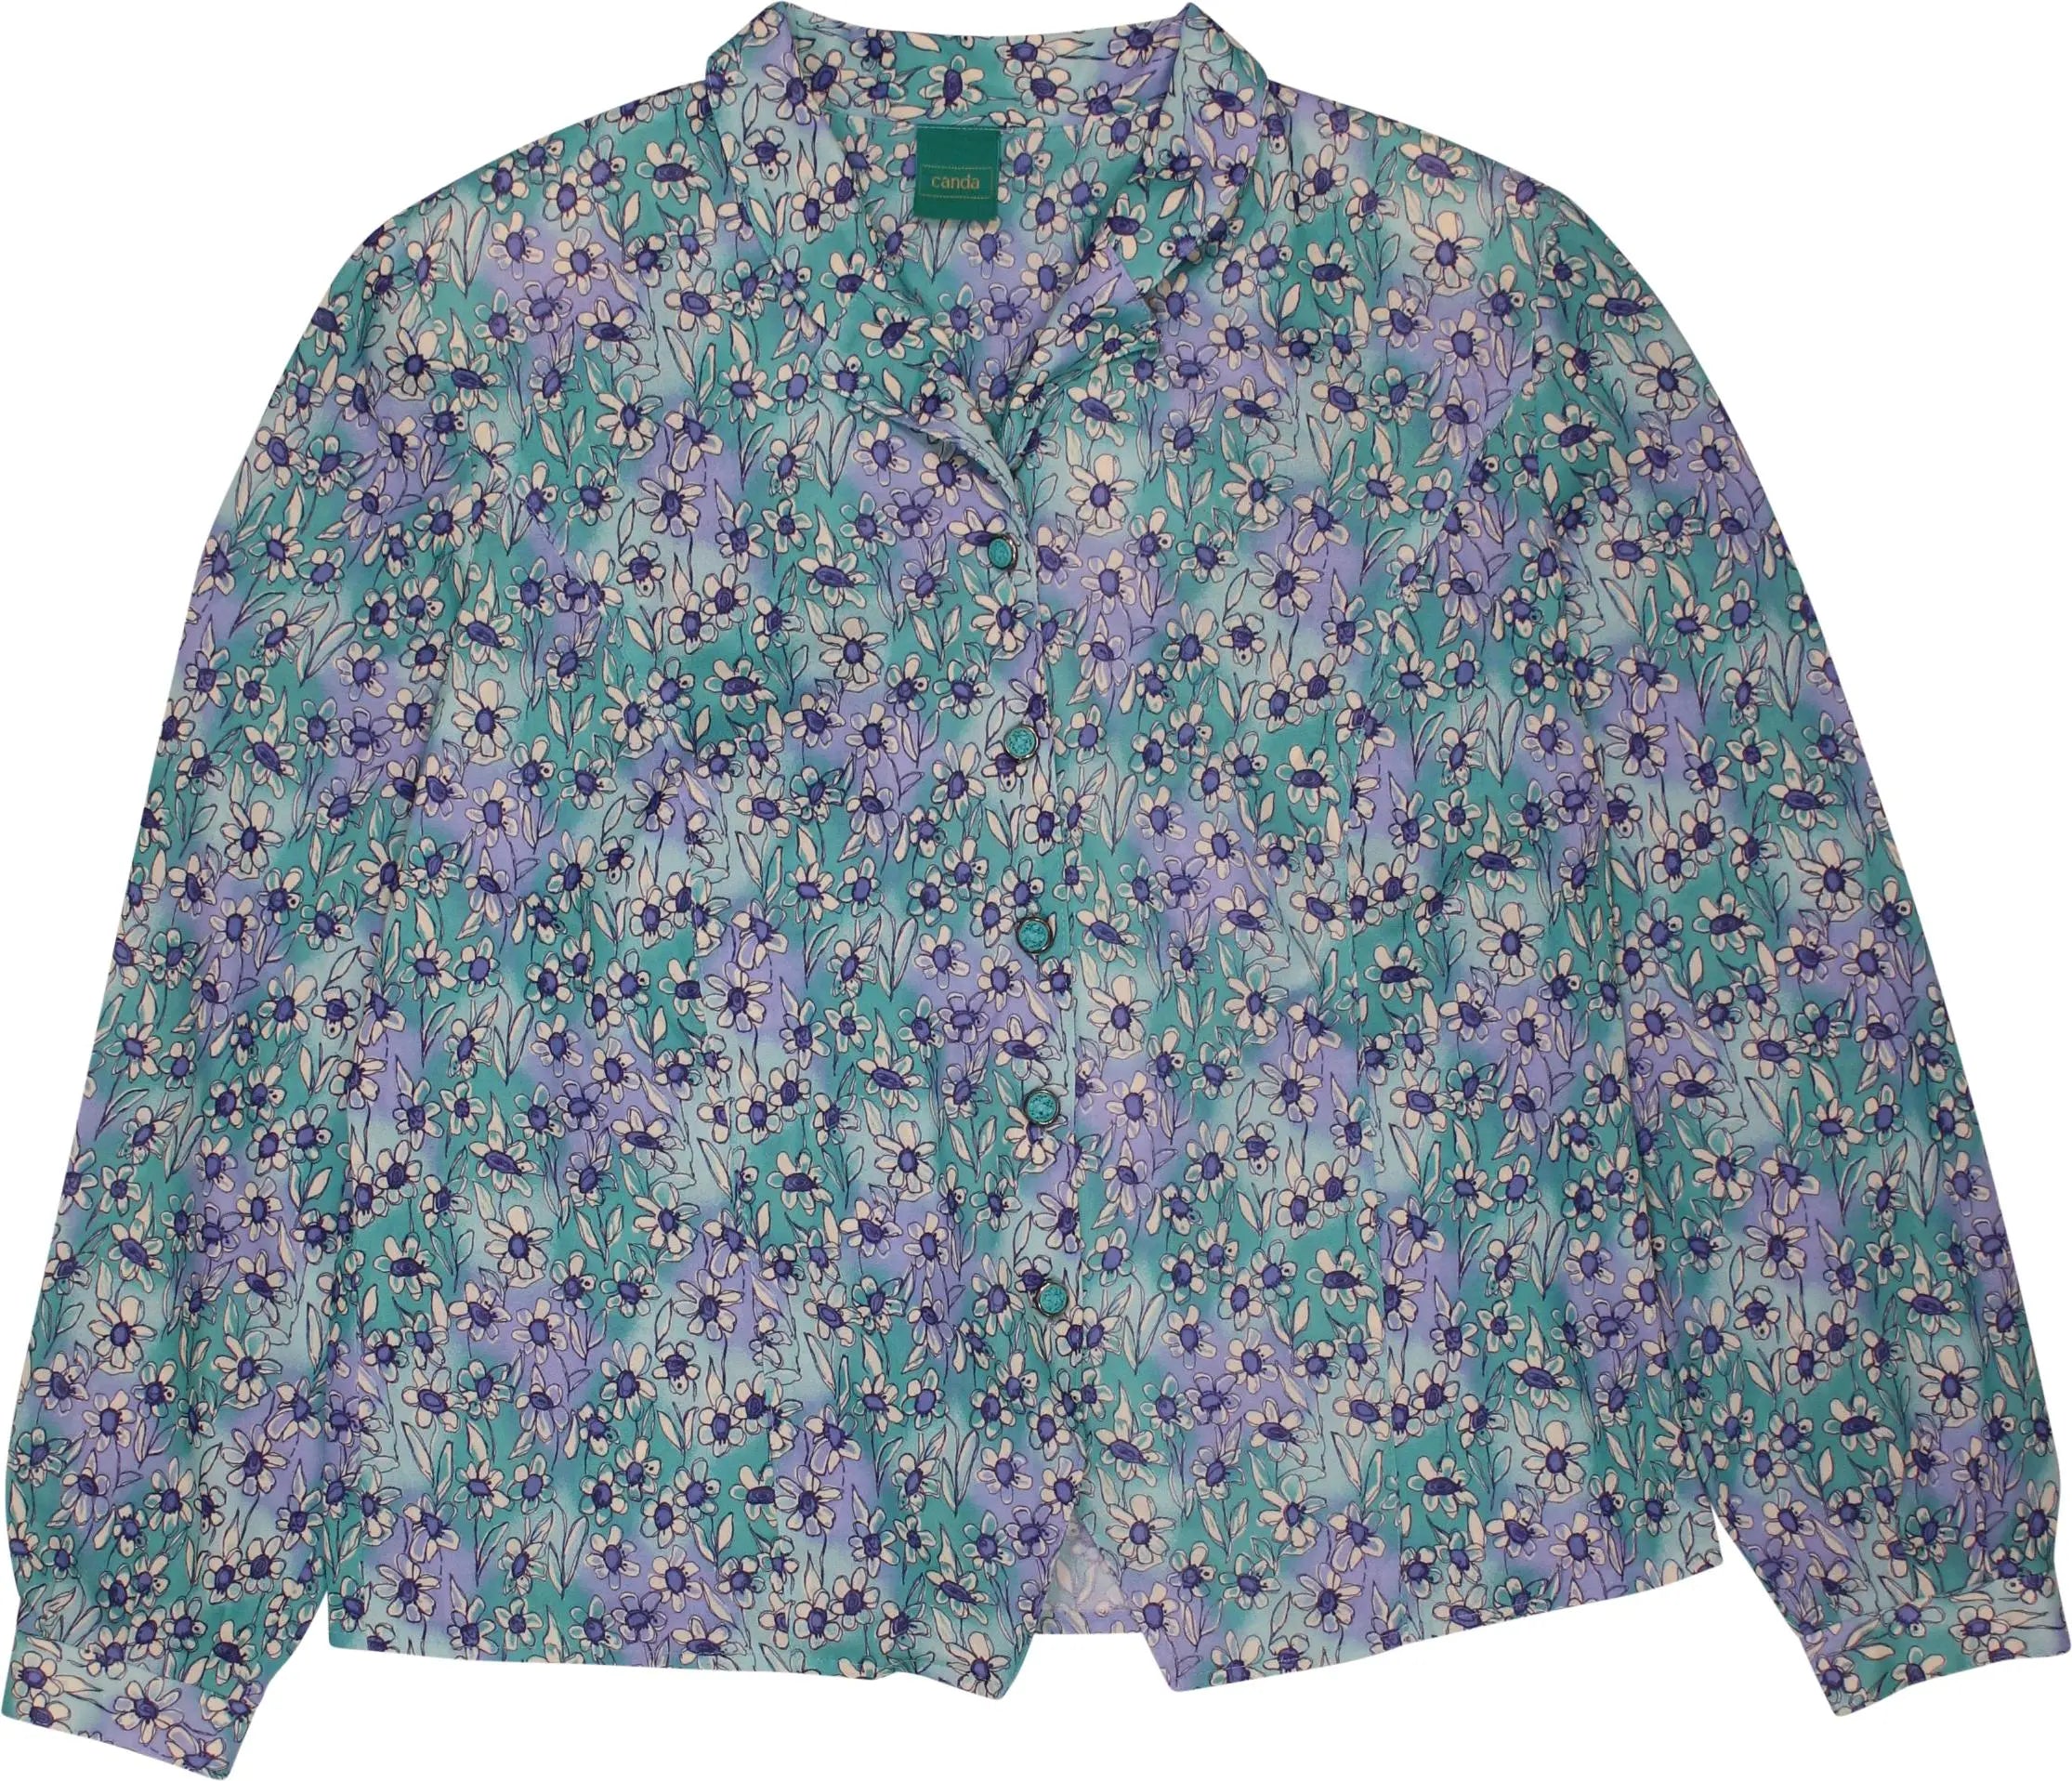 C&A - Vintage Blue Floral Blazer- ThriftTale.com - Vintage and second handclothing